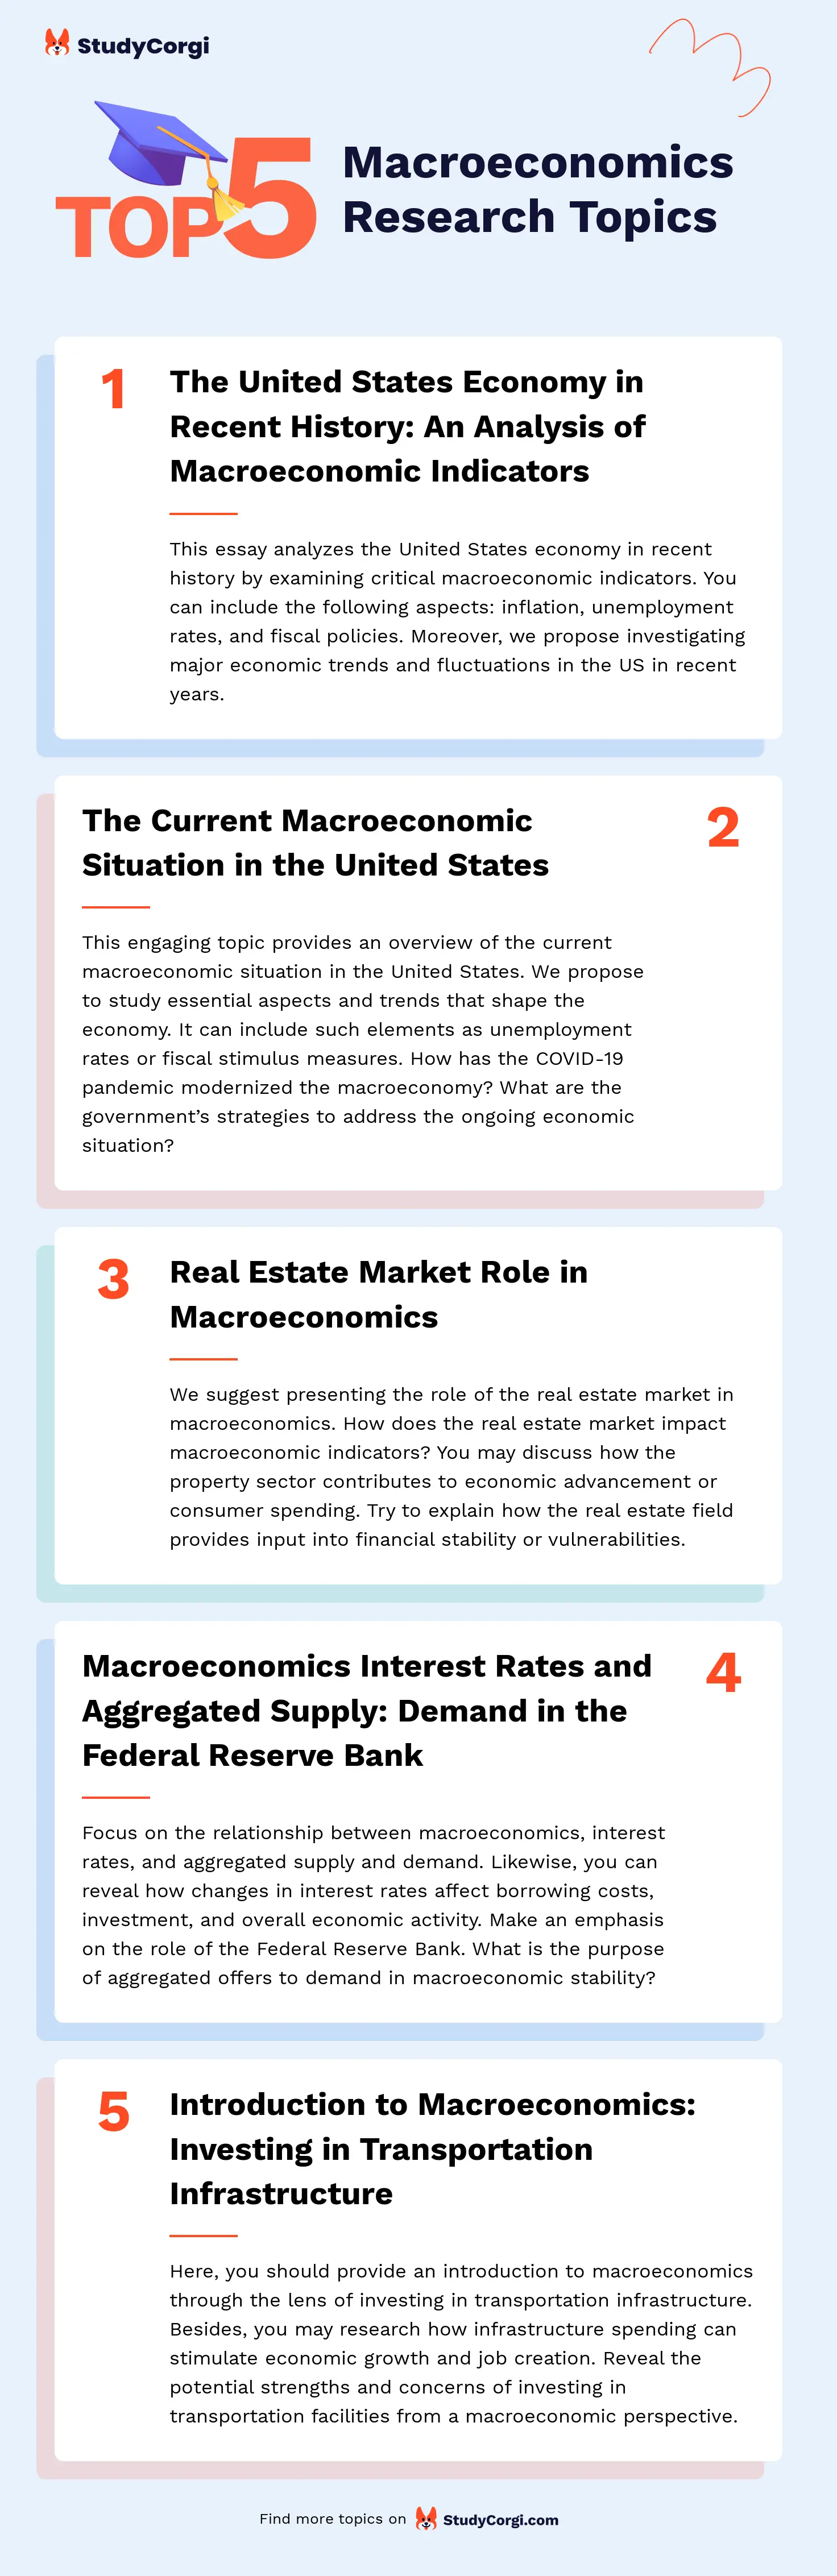 TOP-5 Macroeconomics Research Topics